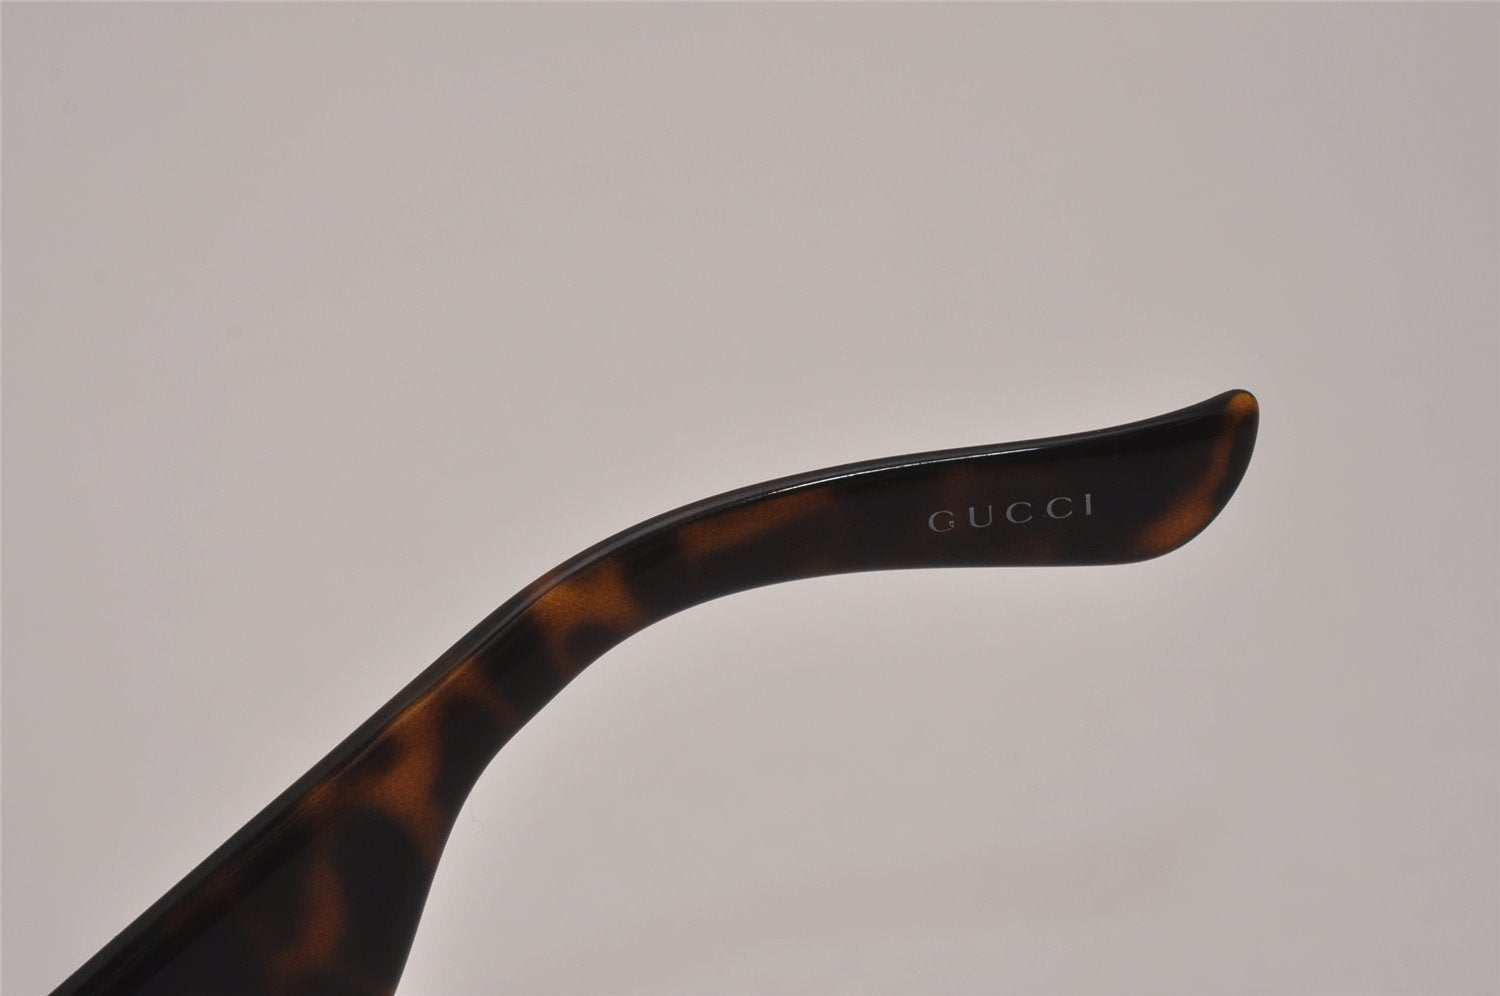 Authentic GUCCI Bamboo Horsebit Sunglasses GG 2970/S Plastic Brown 8049I